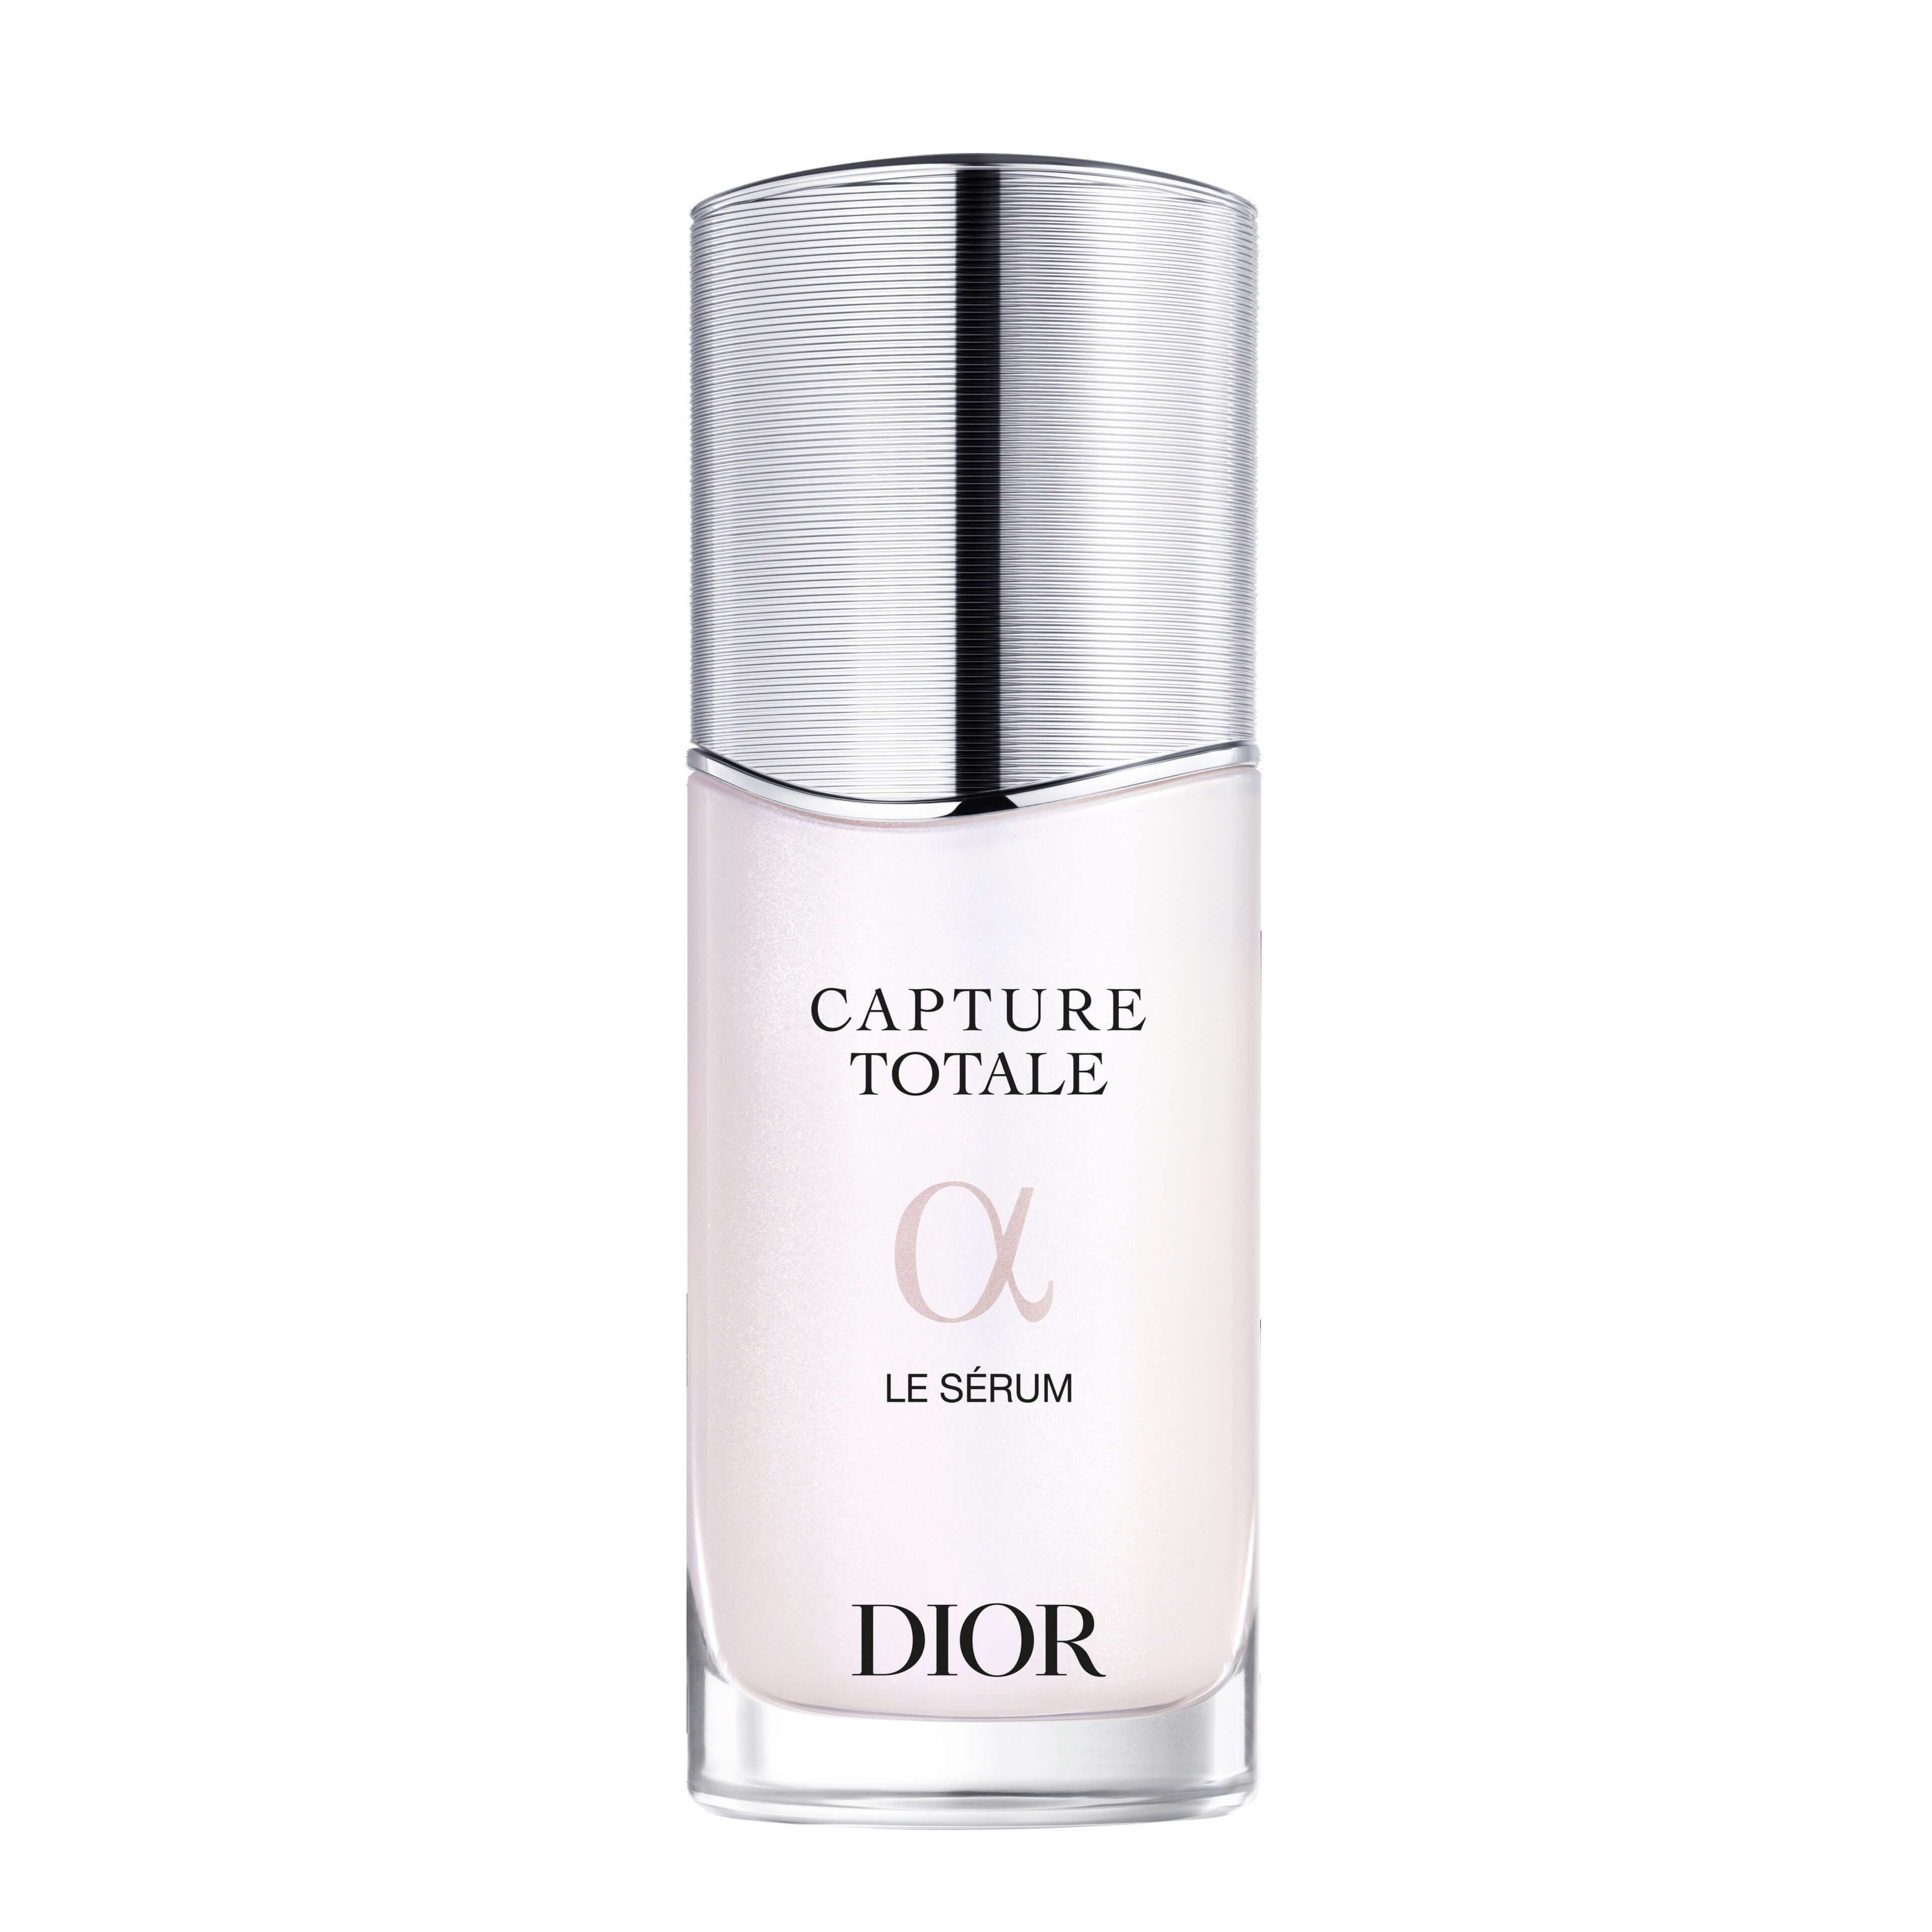 Омолаживающая сыворотка для упругости кожи лица и шеи Cristian Dior Capture Totale dior сыворотка capture totale le serum